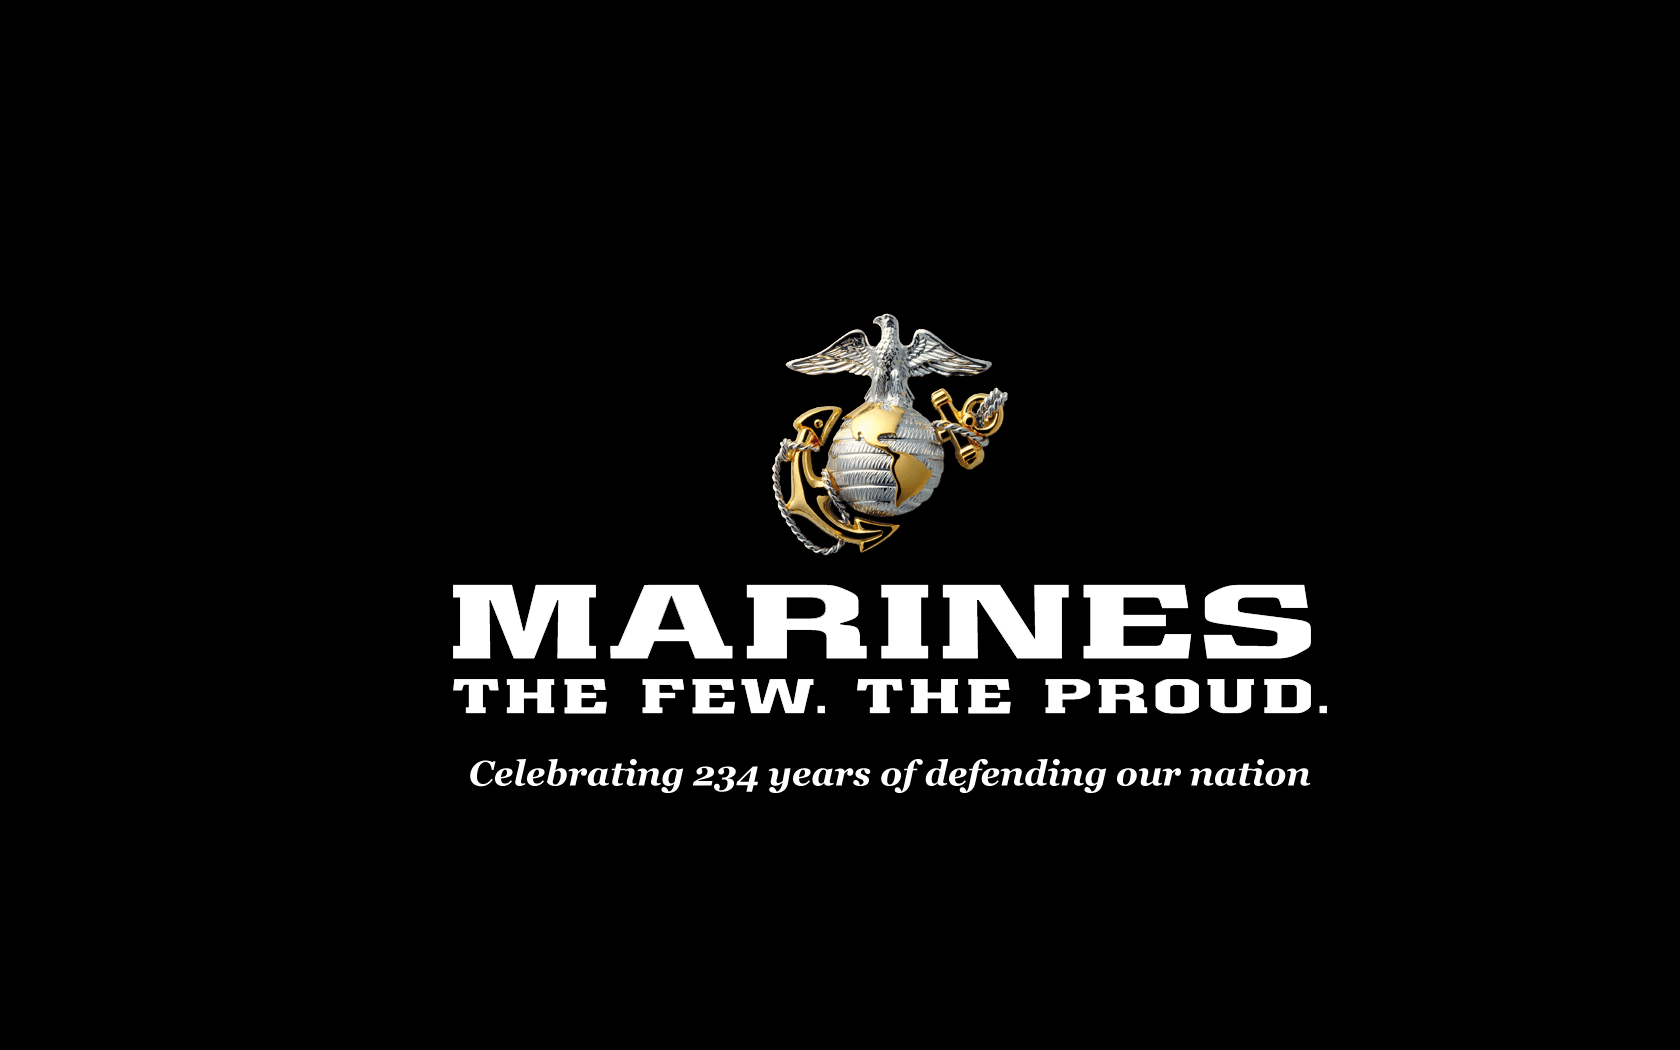 USA Marine Corps Wallpaper HD 1600×1200 Definition